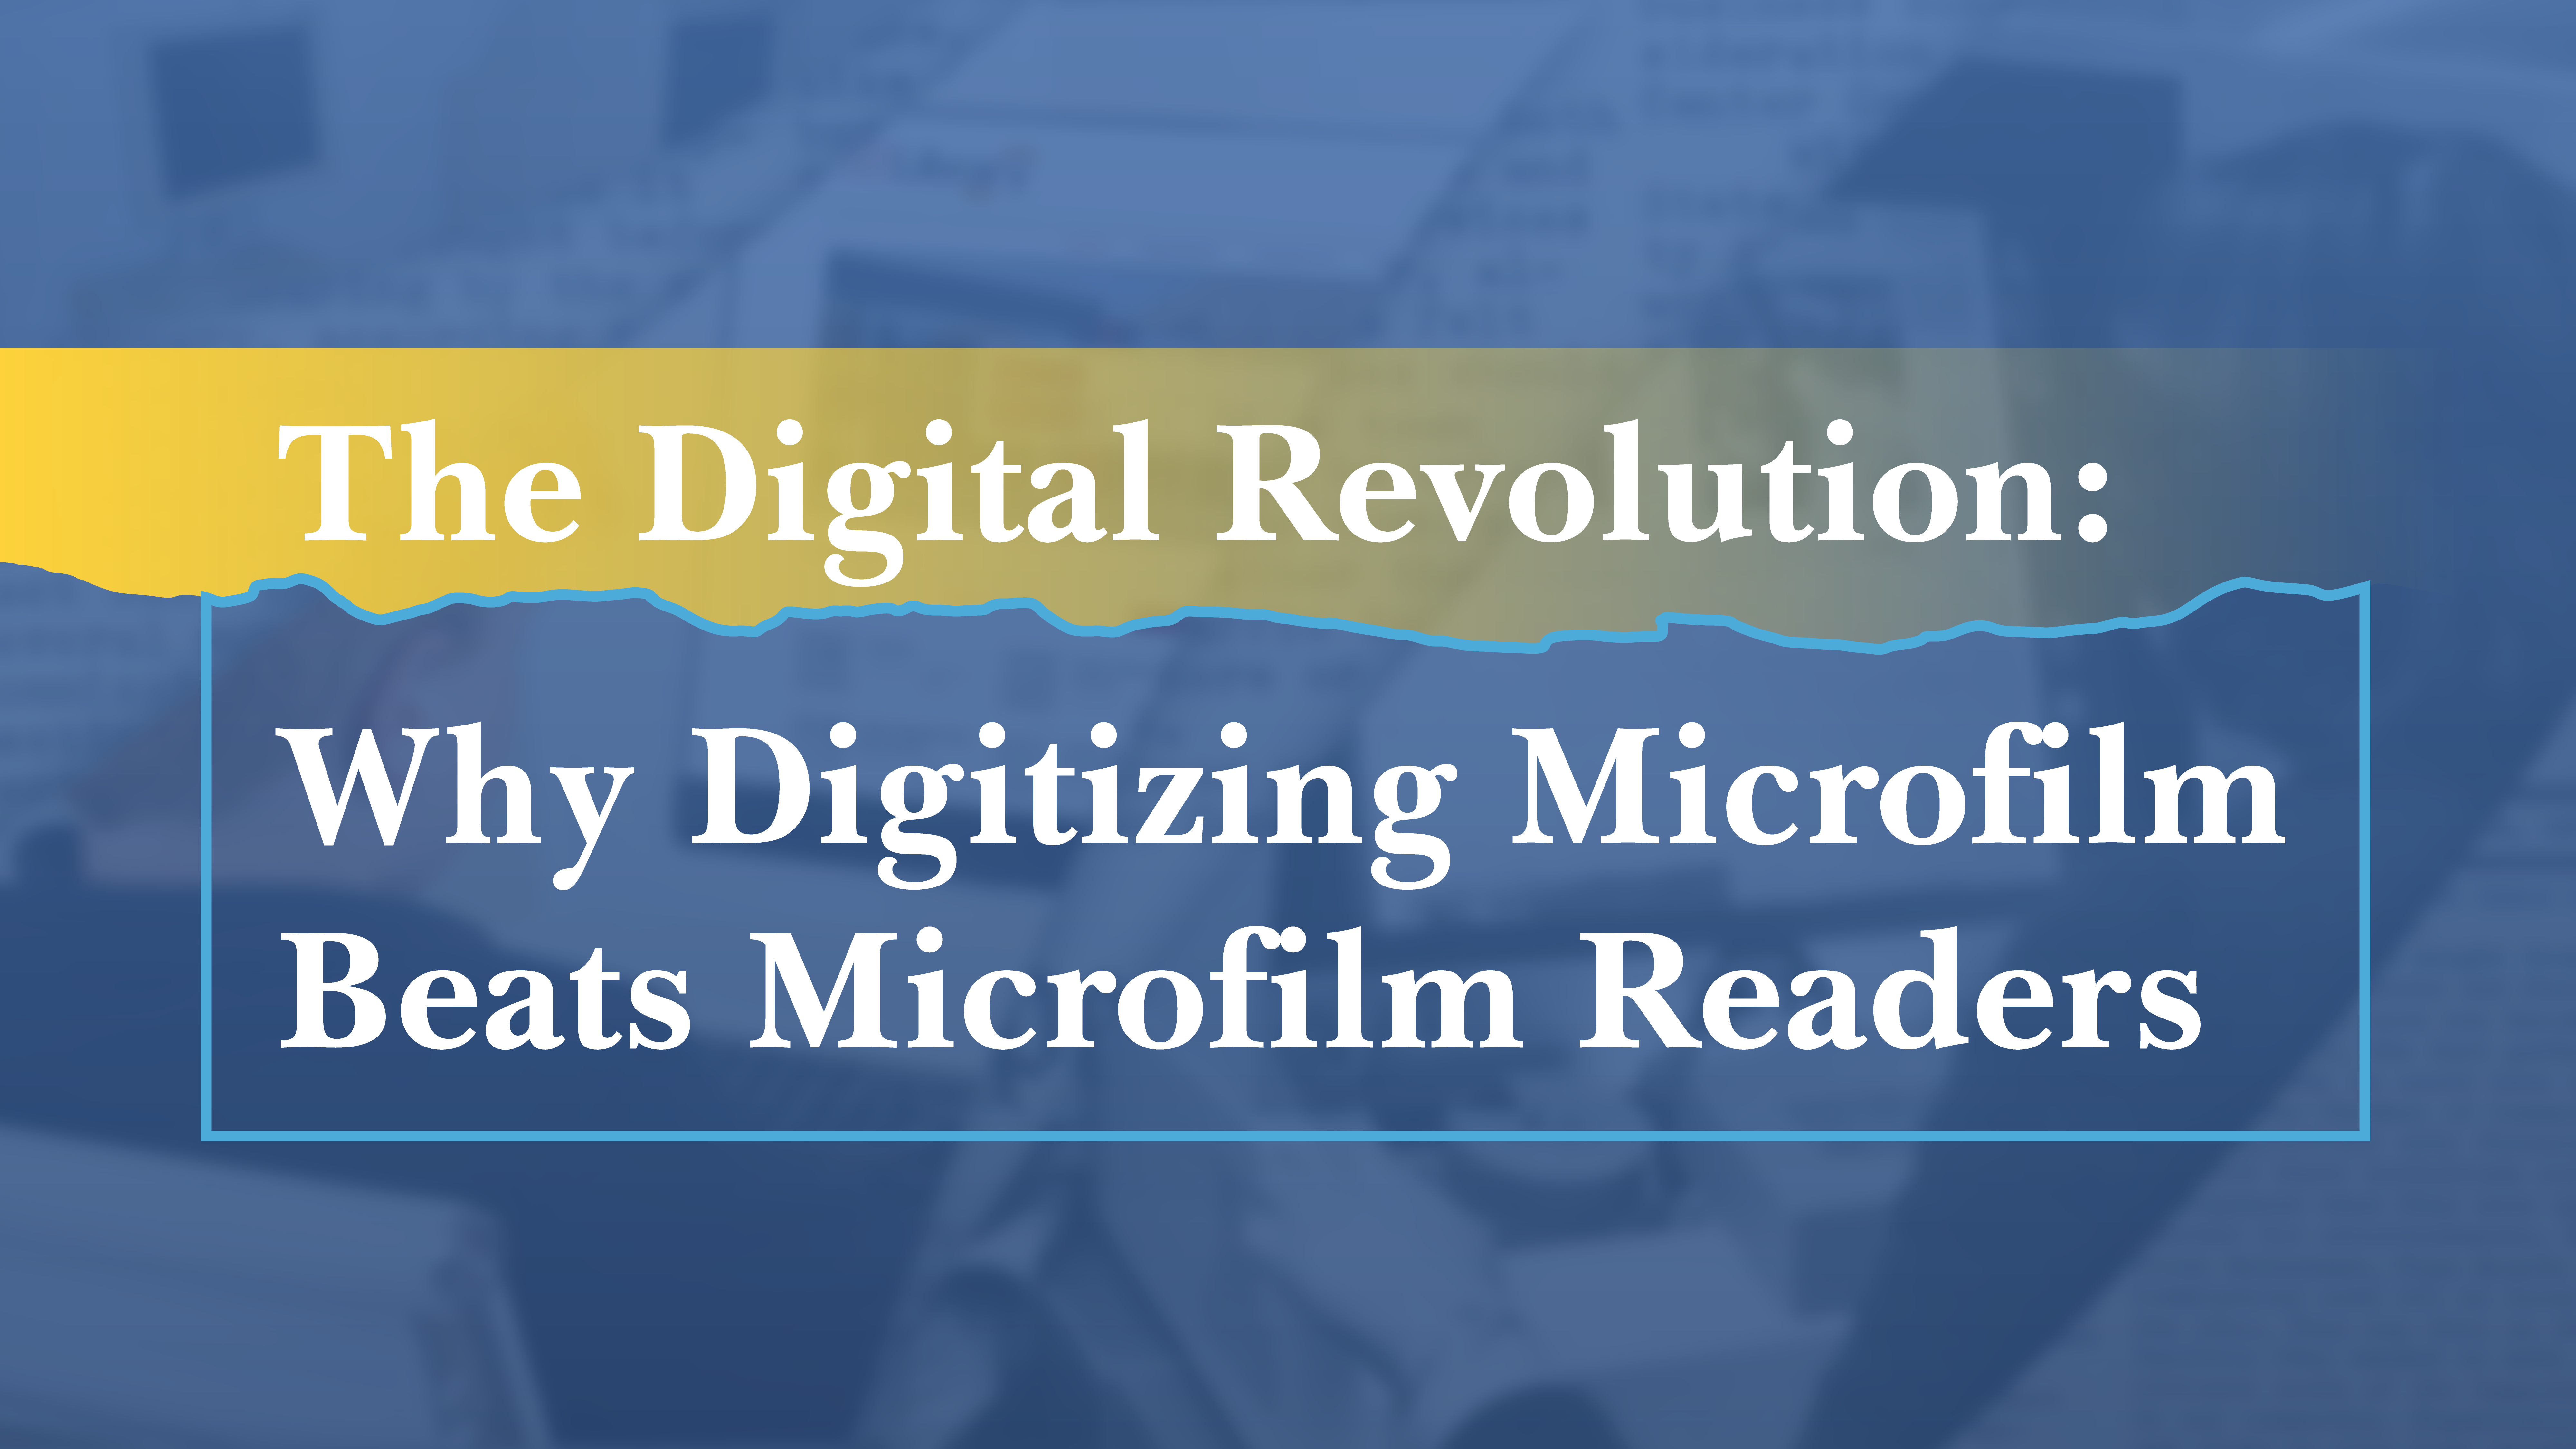 The Digital Revolution: Why Digitizing Microfilm Beats Microfilm Readers